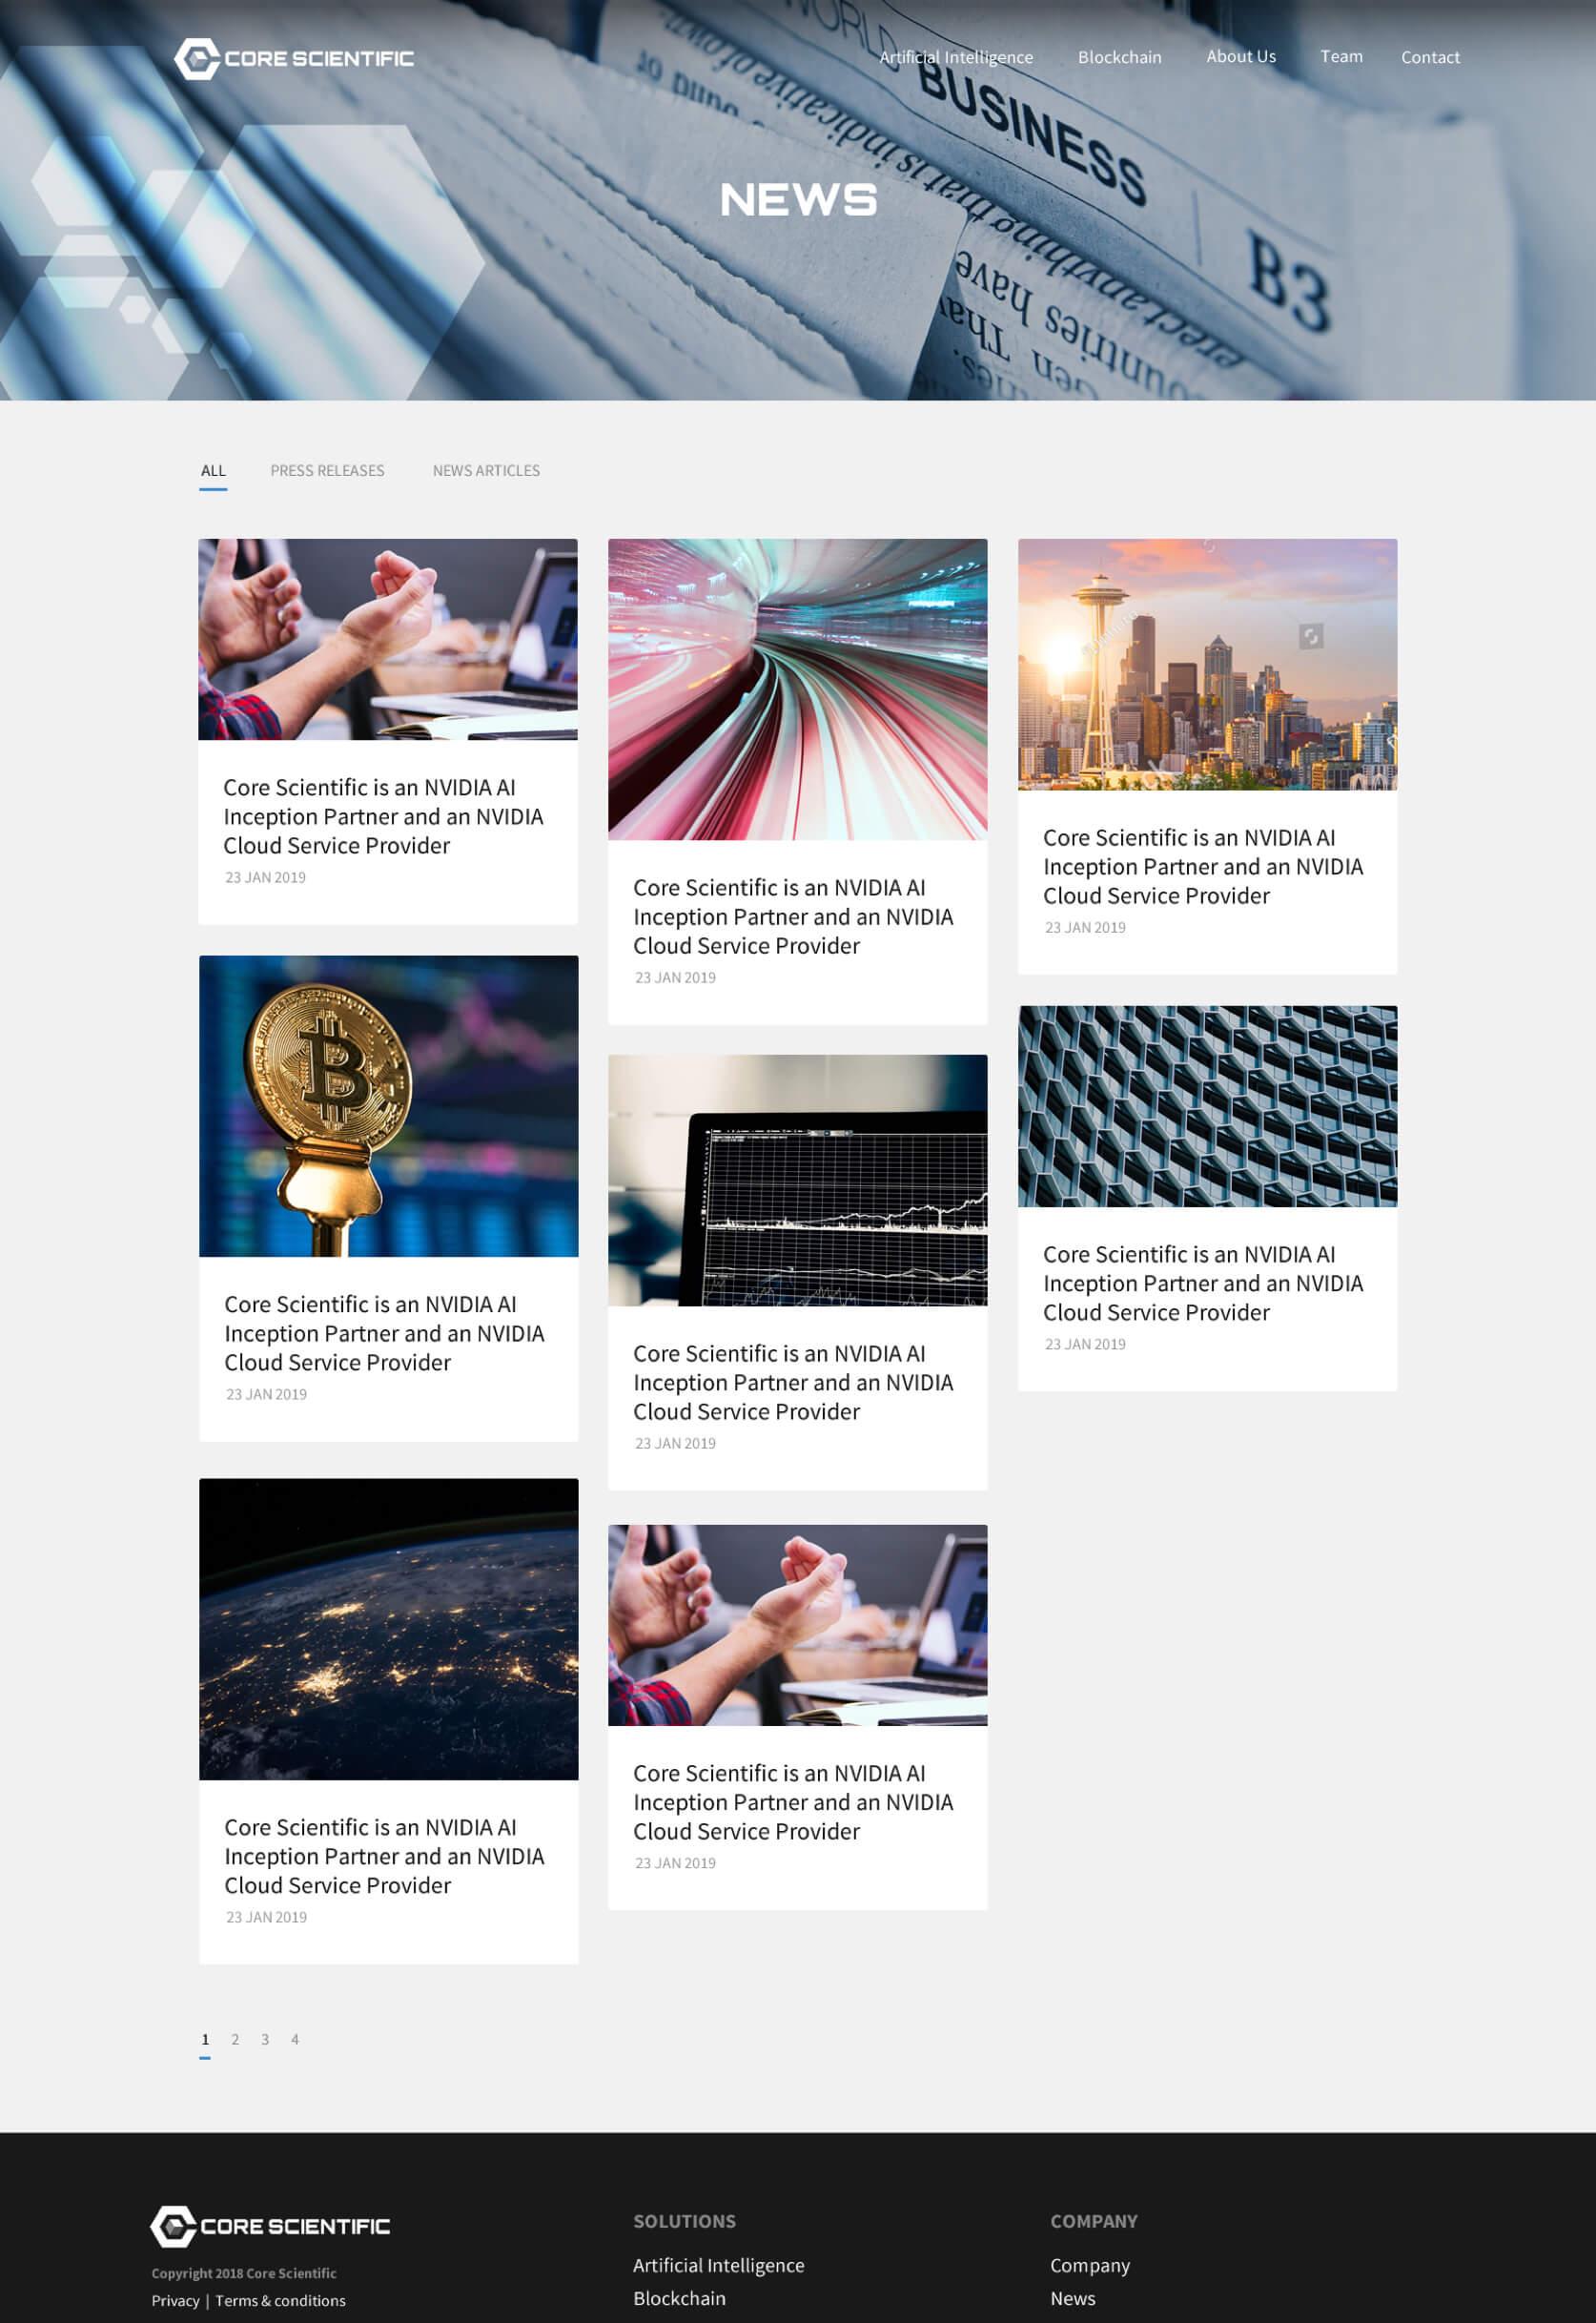 A desktop screenshot of the Core Scientific news landing page